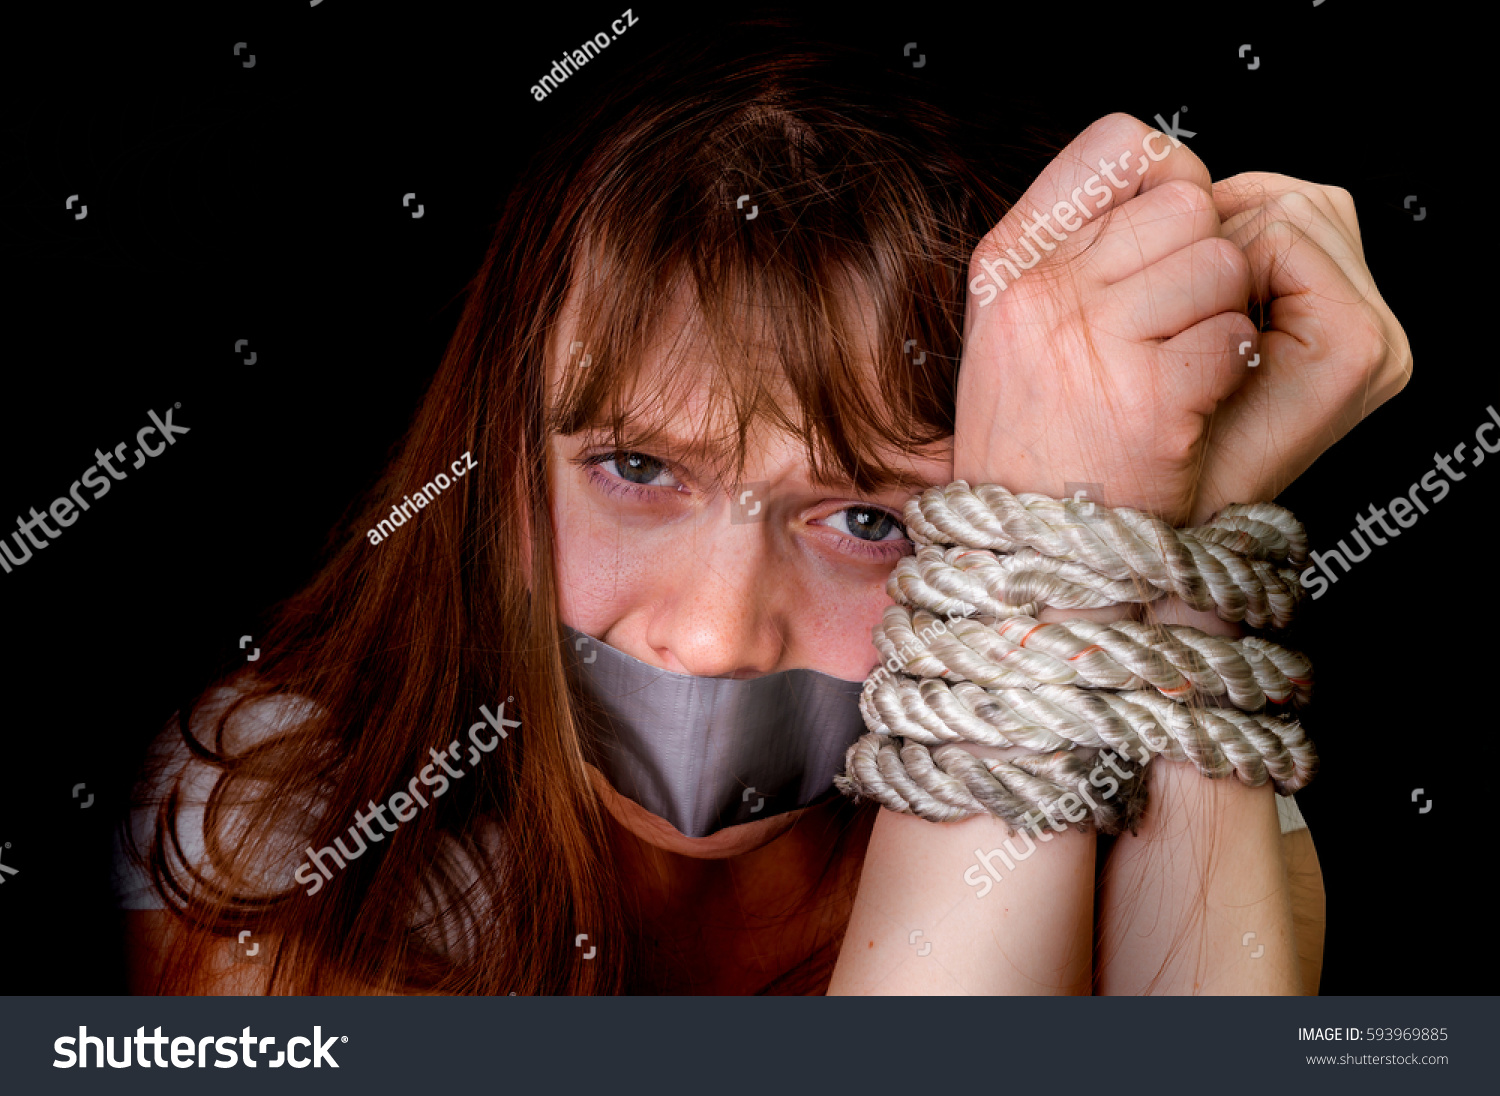 Silent bondage girls tied pics carry